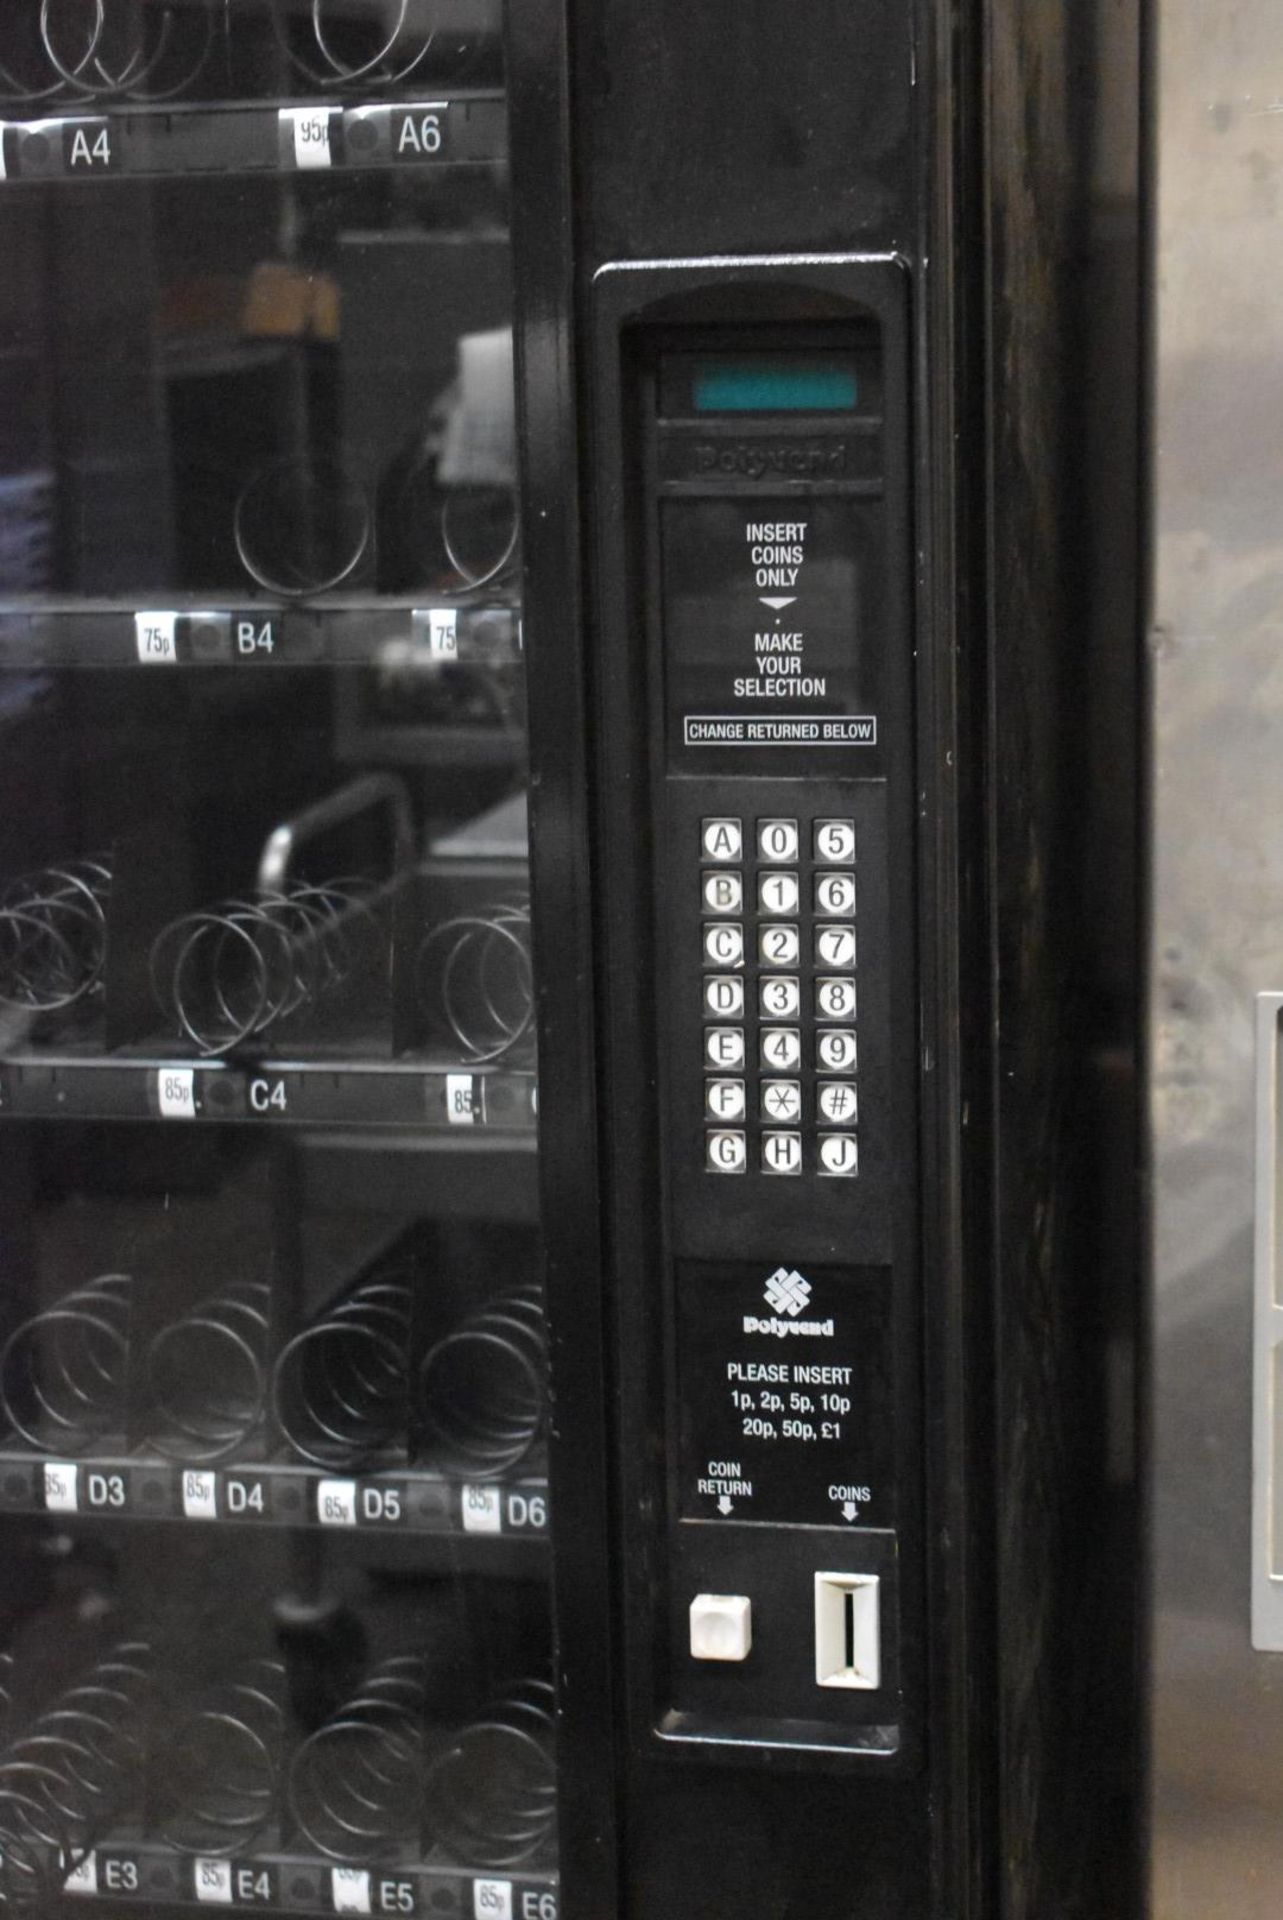 1 x Polyvend 453 Snack Food Vending Machine - H182 x W65 x D72 cms - Ref: GCA153 WH5 - CL011 - - Image 5 of 12